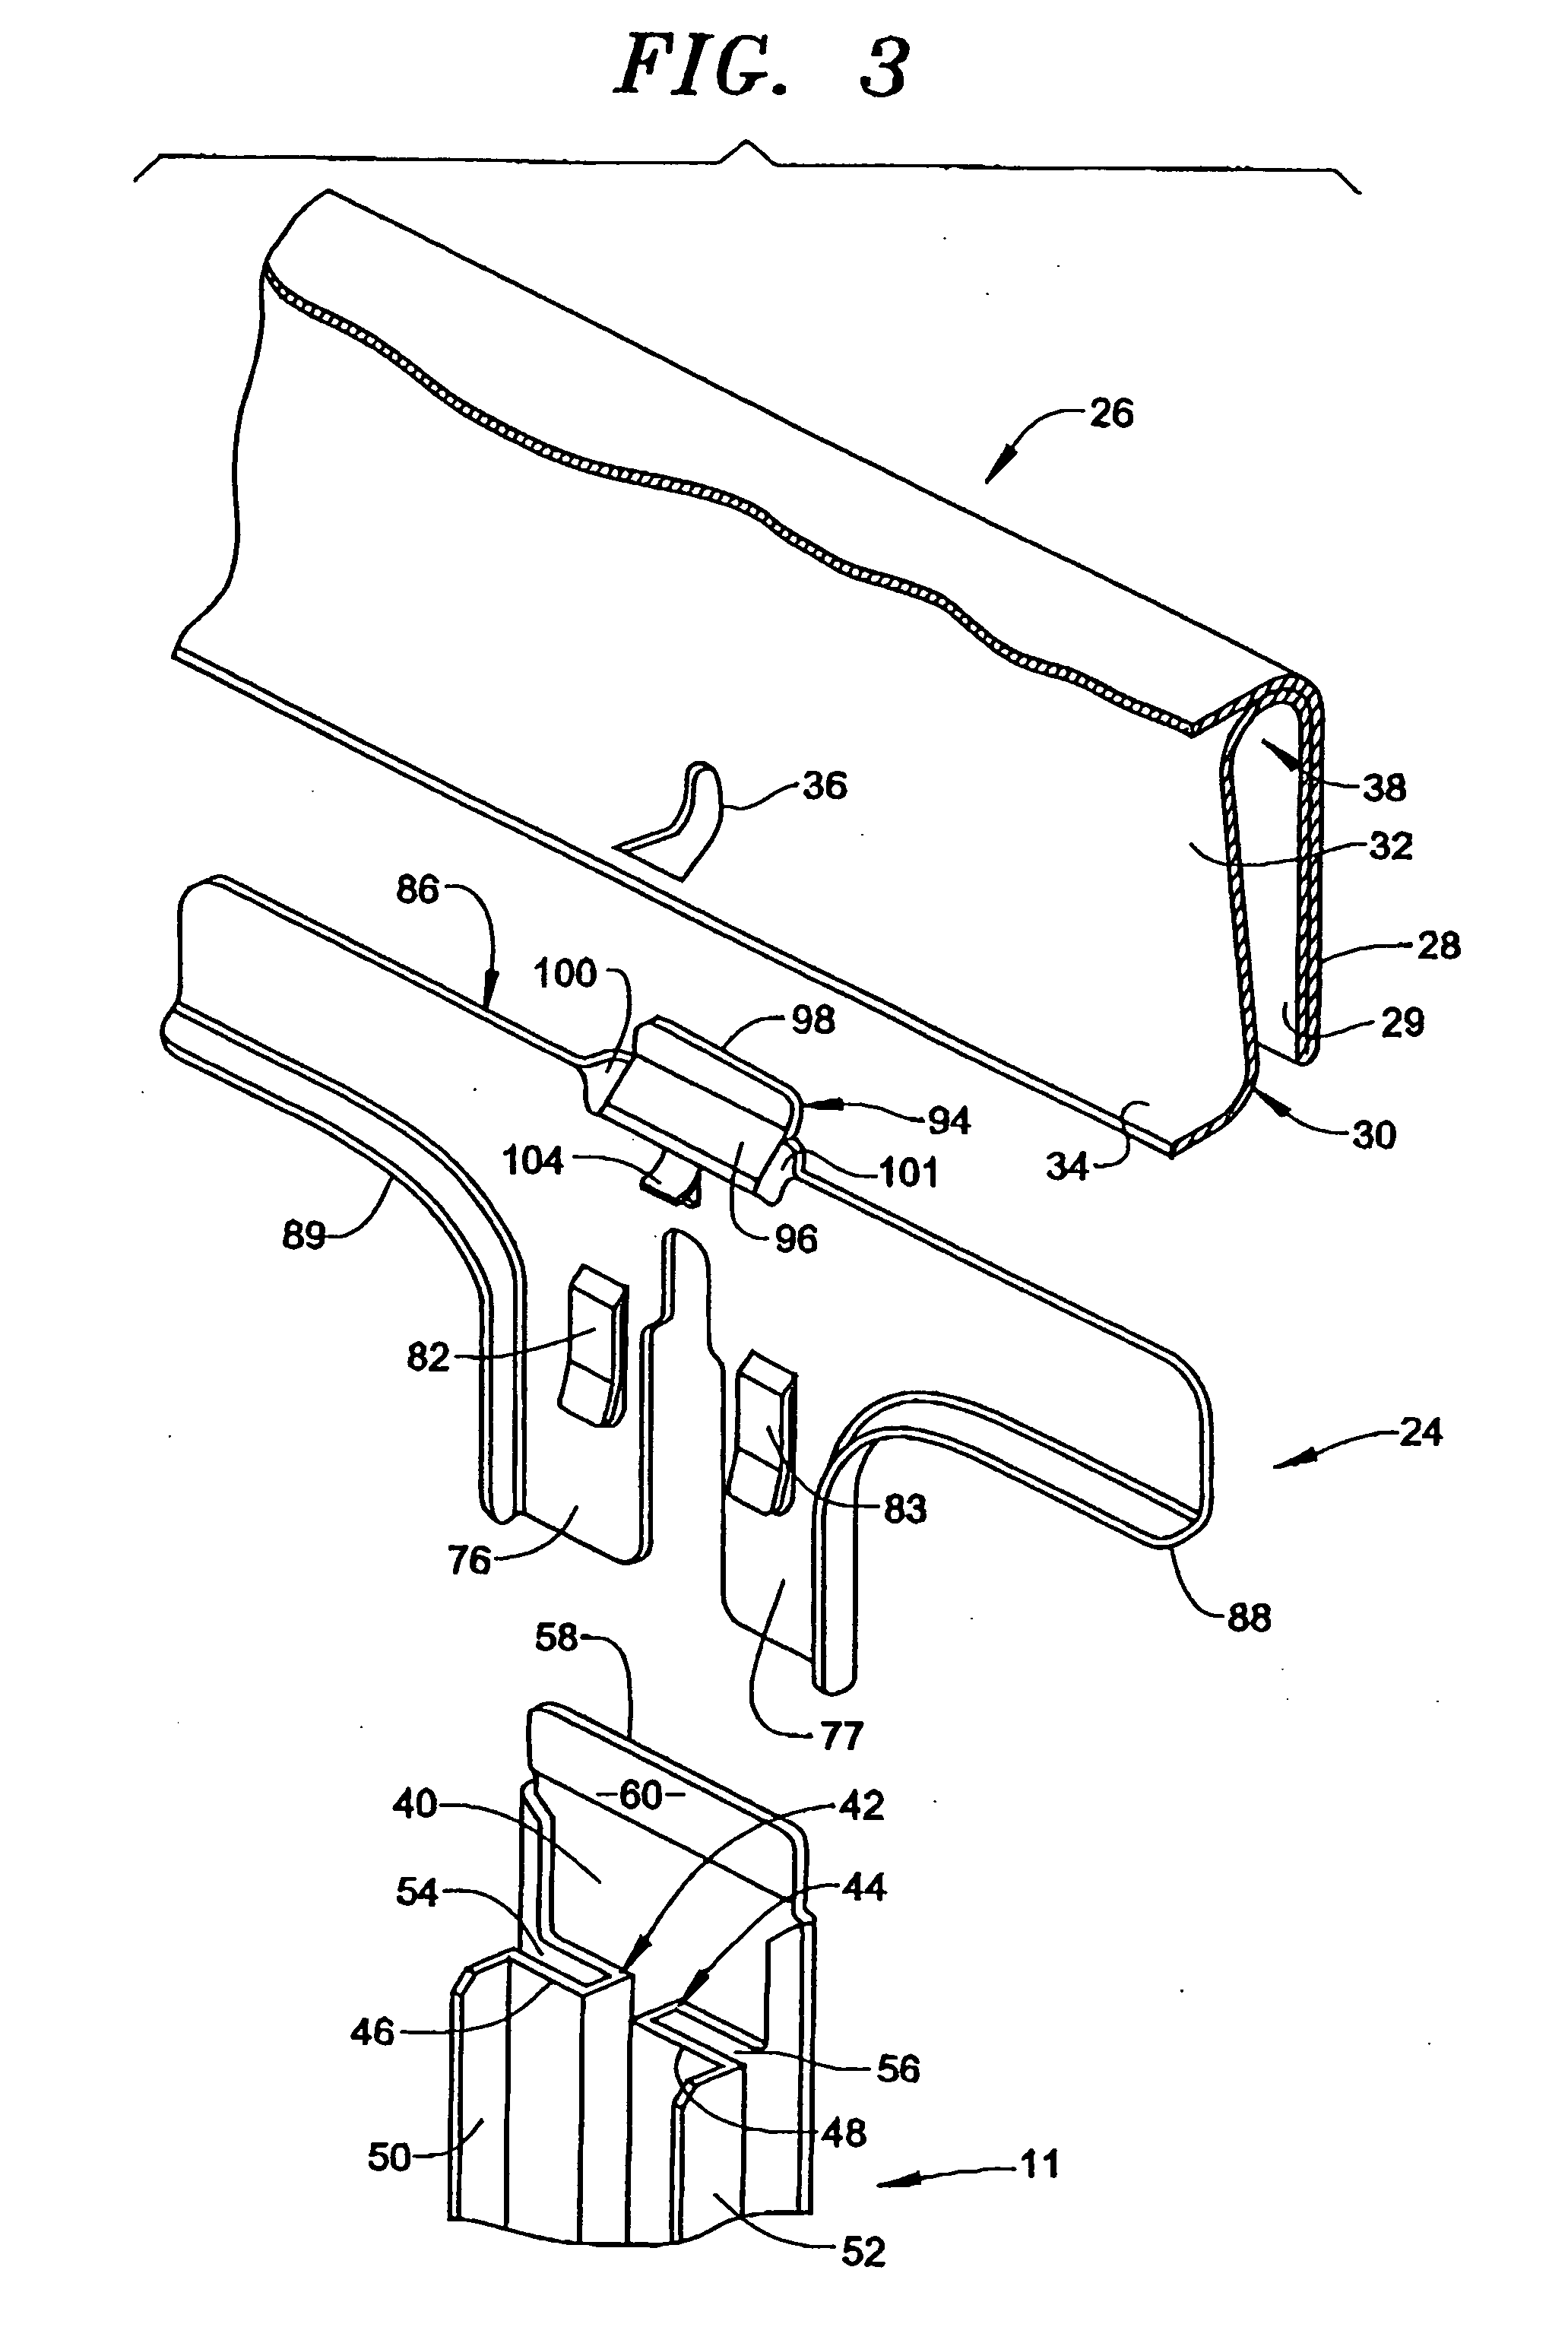 Notched mullion retainer arrangement for a refrigerator cabinet